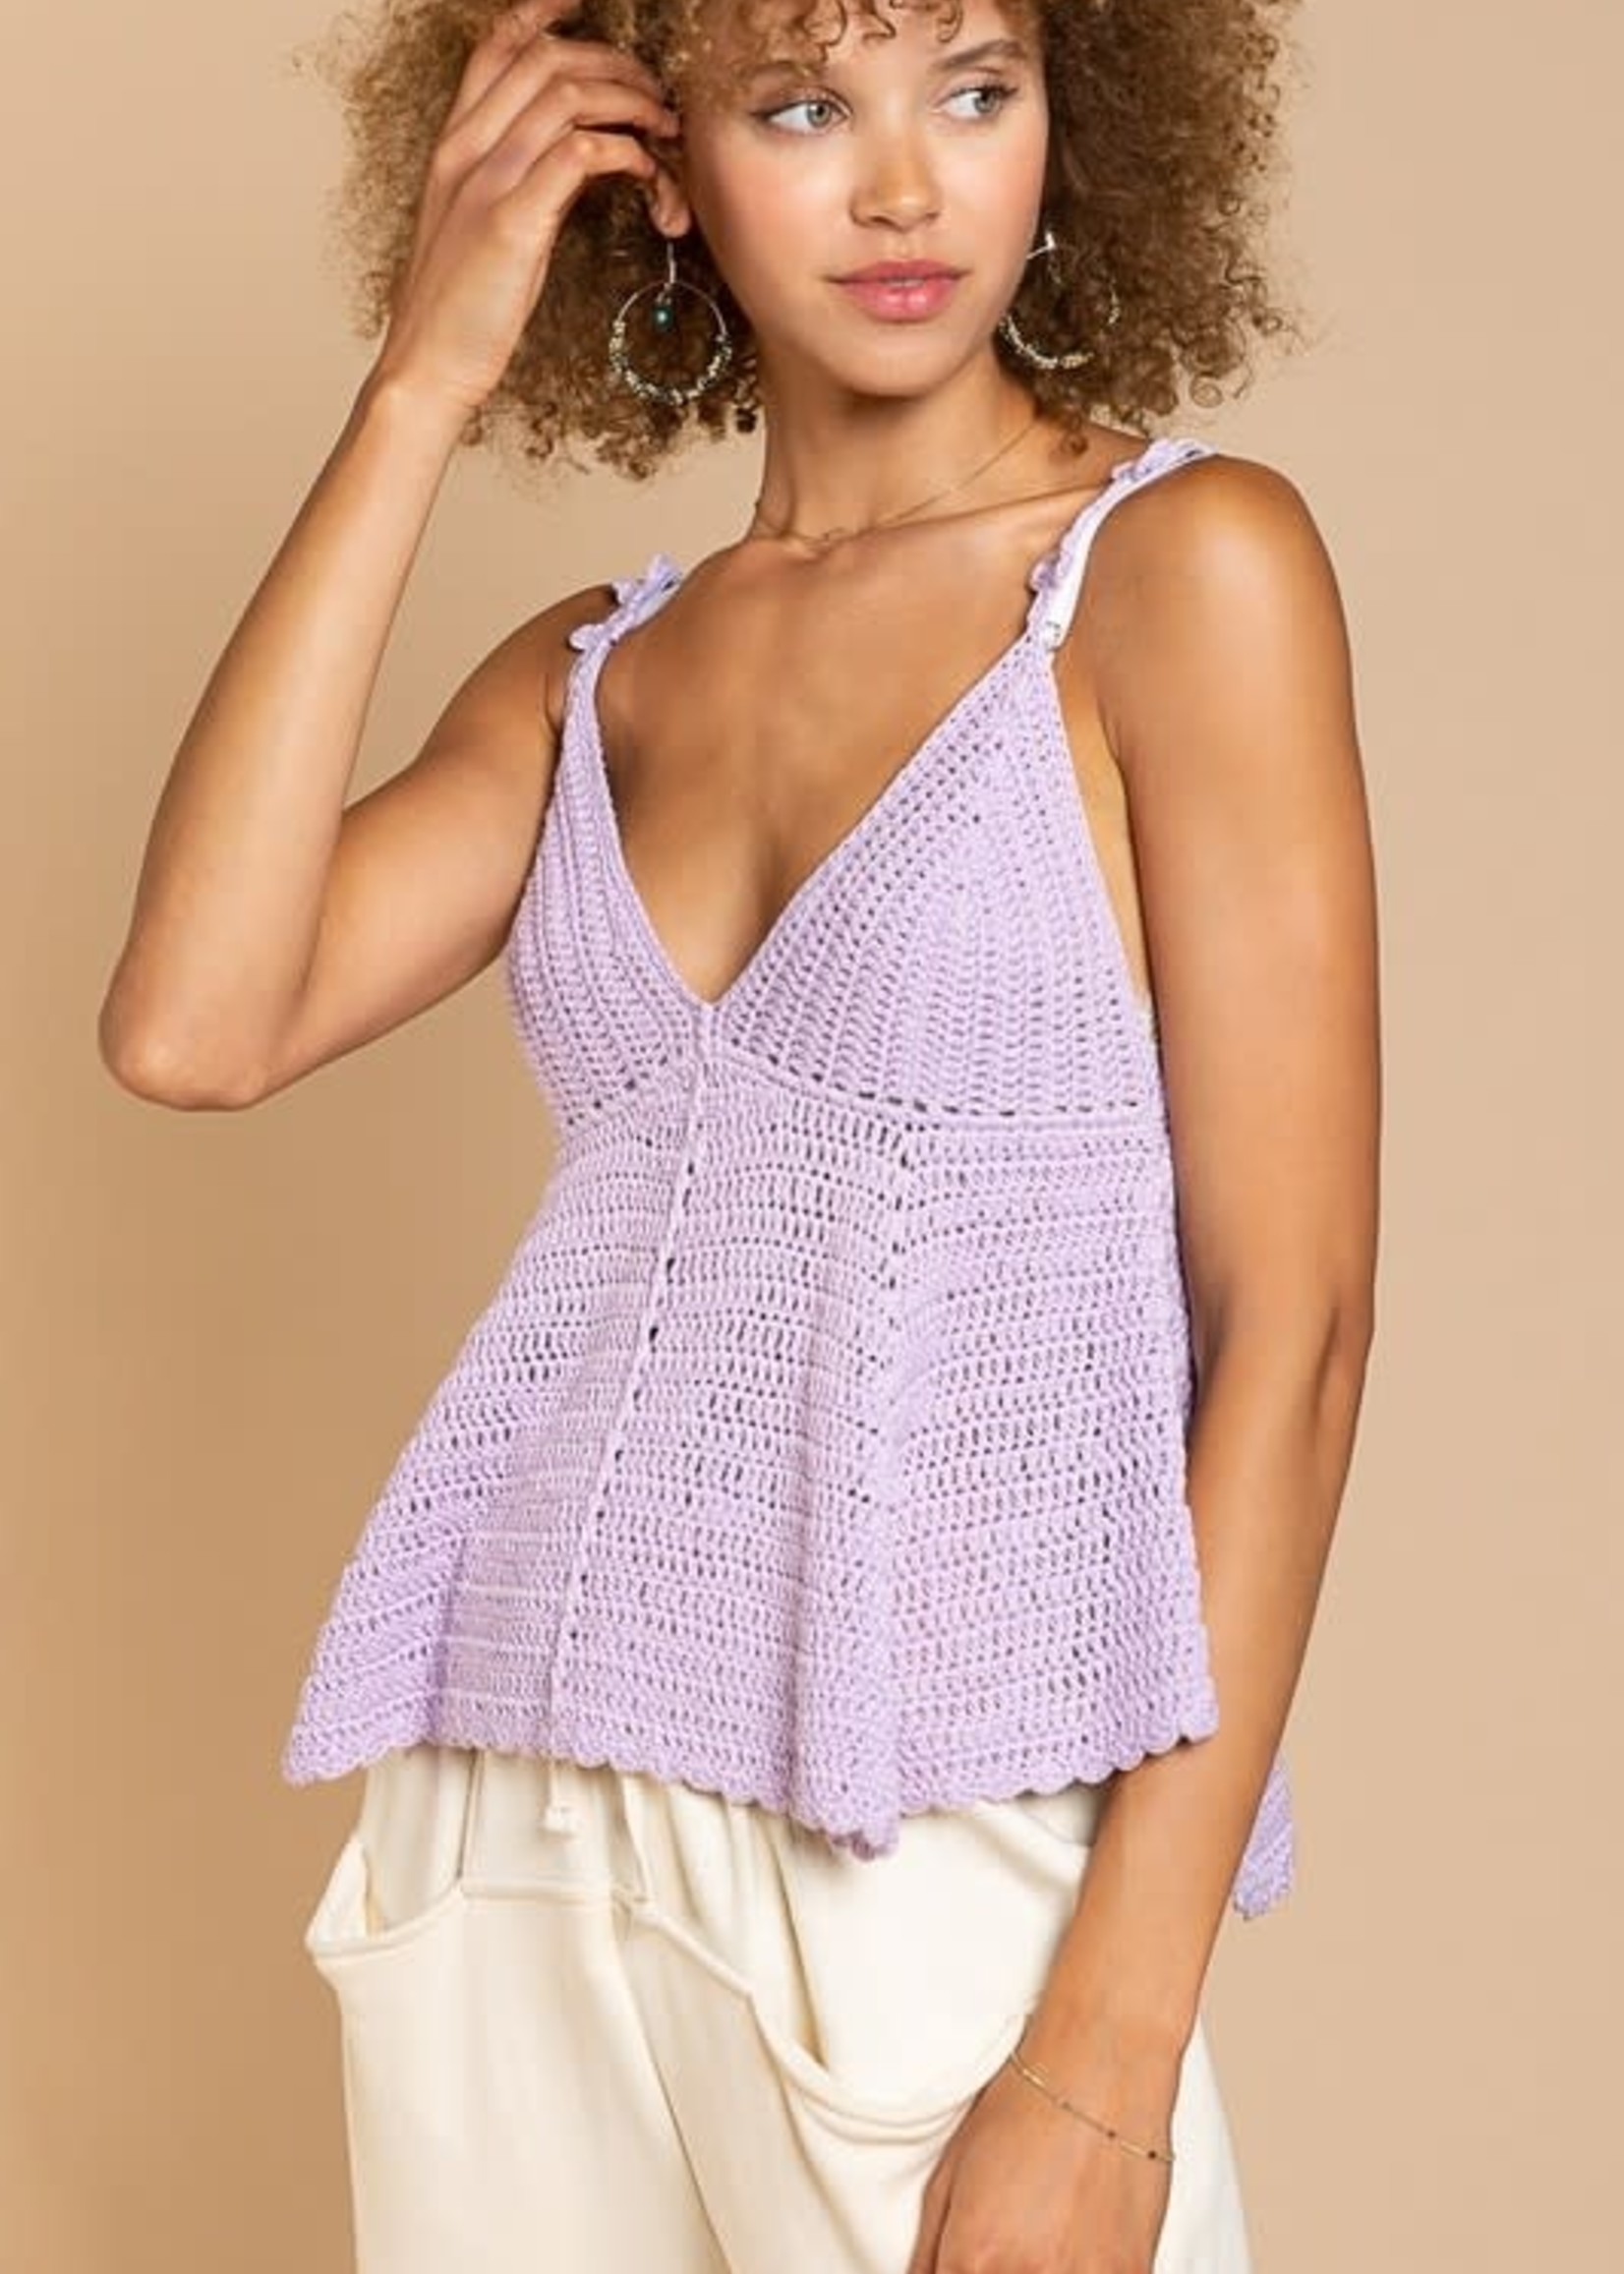 Lavender Crochet Top